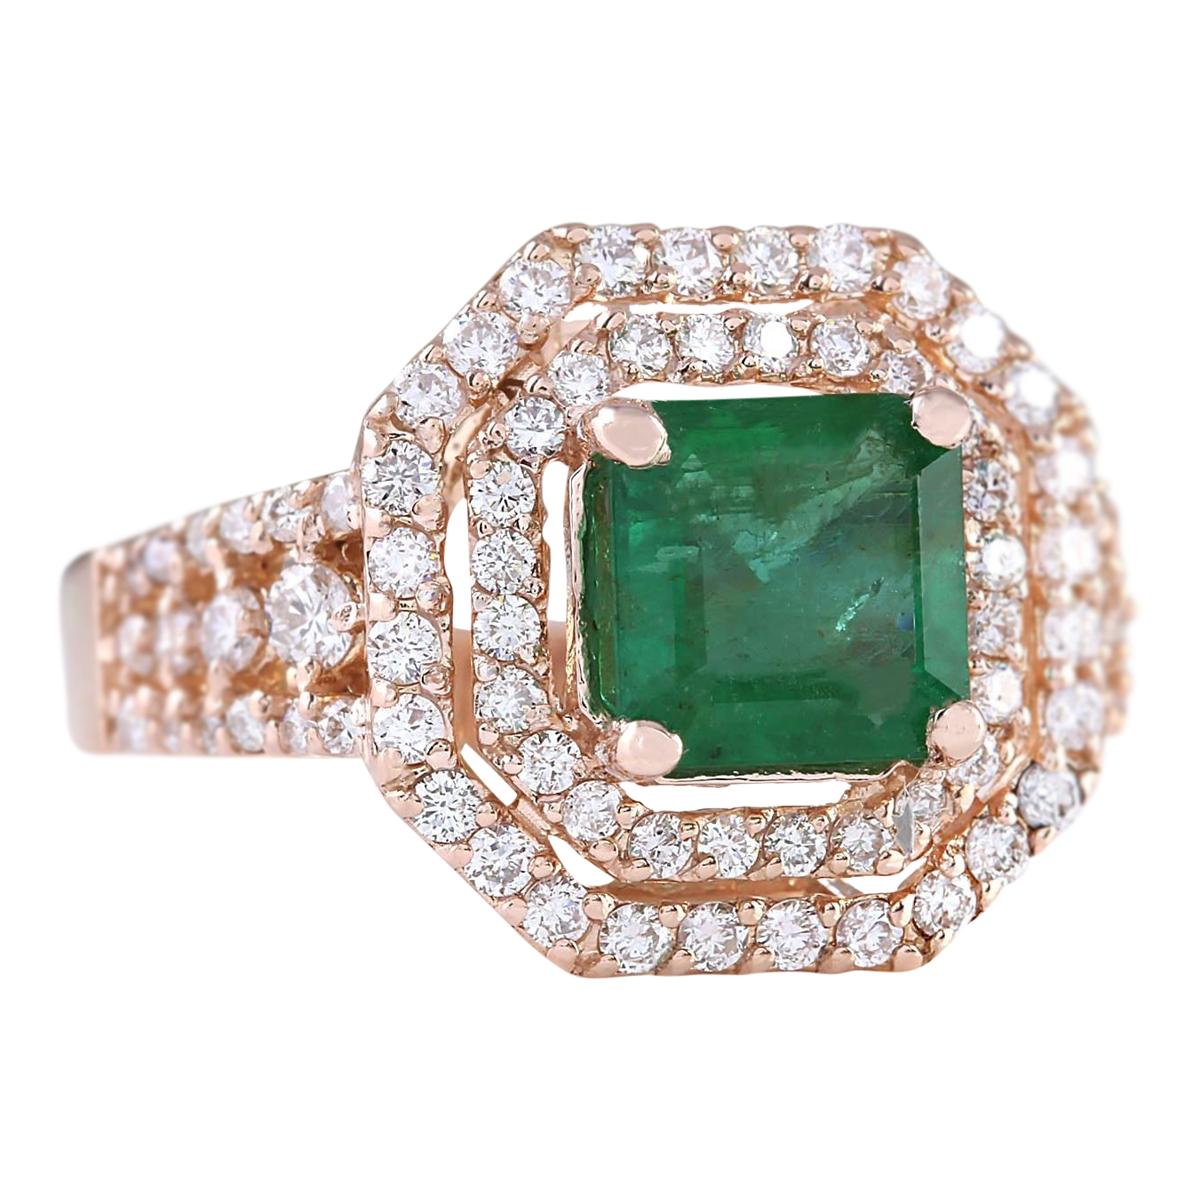 2.66 Carat Natural Emerald 14 Karat Rose Gold Diamond Ring
Stamped: 14K Rose Gold
Total Ring Weight: 6.5 Grams
Total Natural Emerald Weight is 1.86 Carat (Measures: 7.50x7.50 mm)
Color: Green
Total Natural Diamond Weight is 0.80 Carat
Color: F-G,